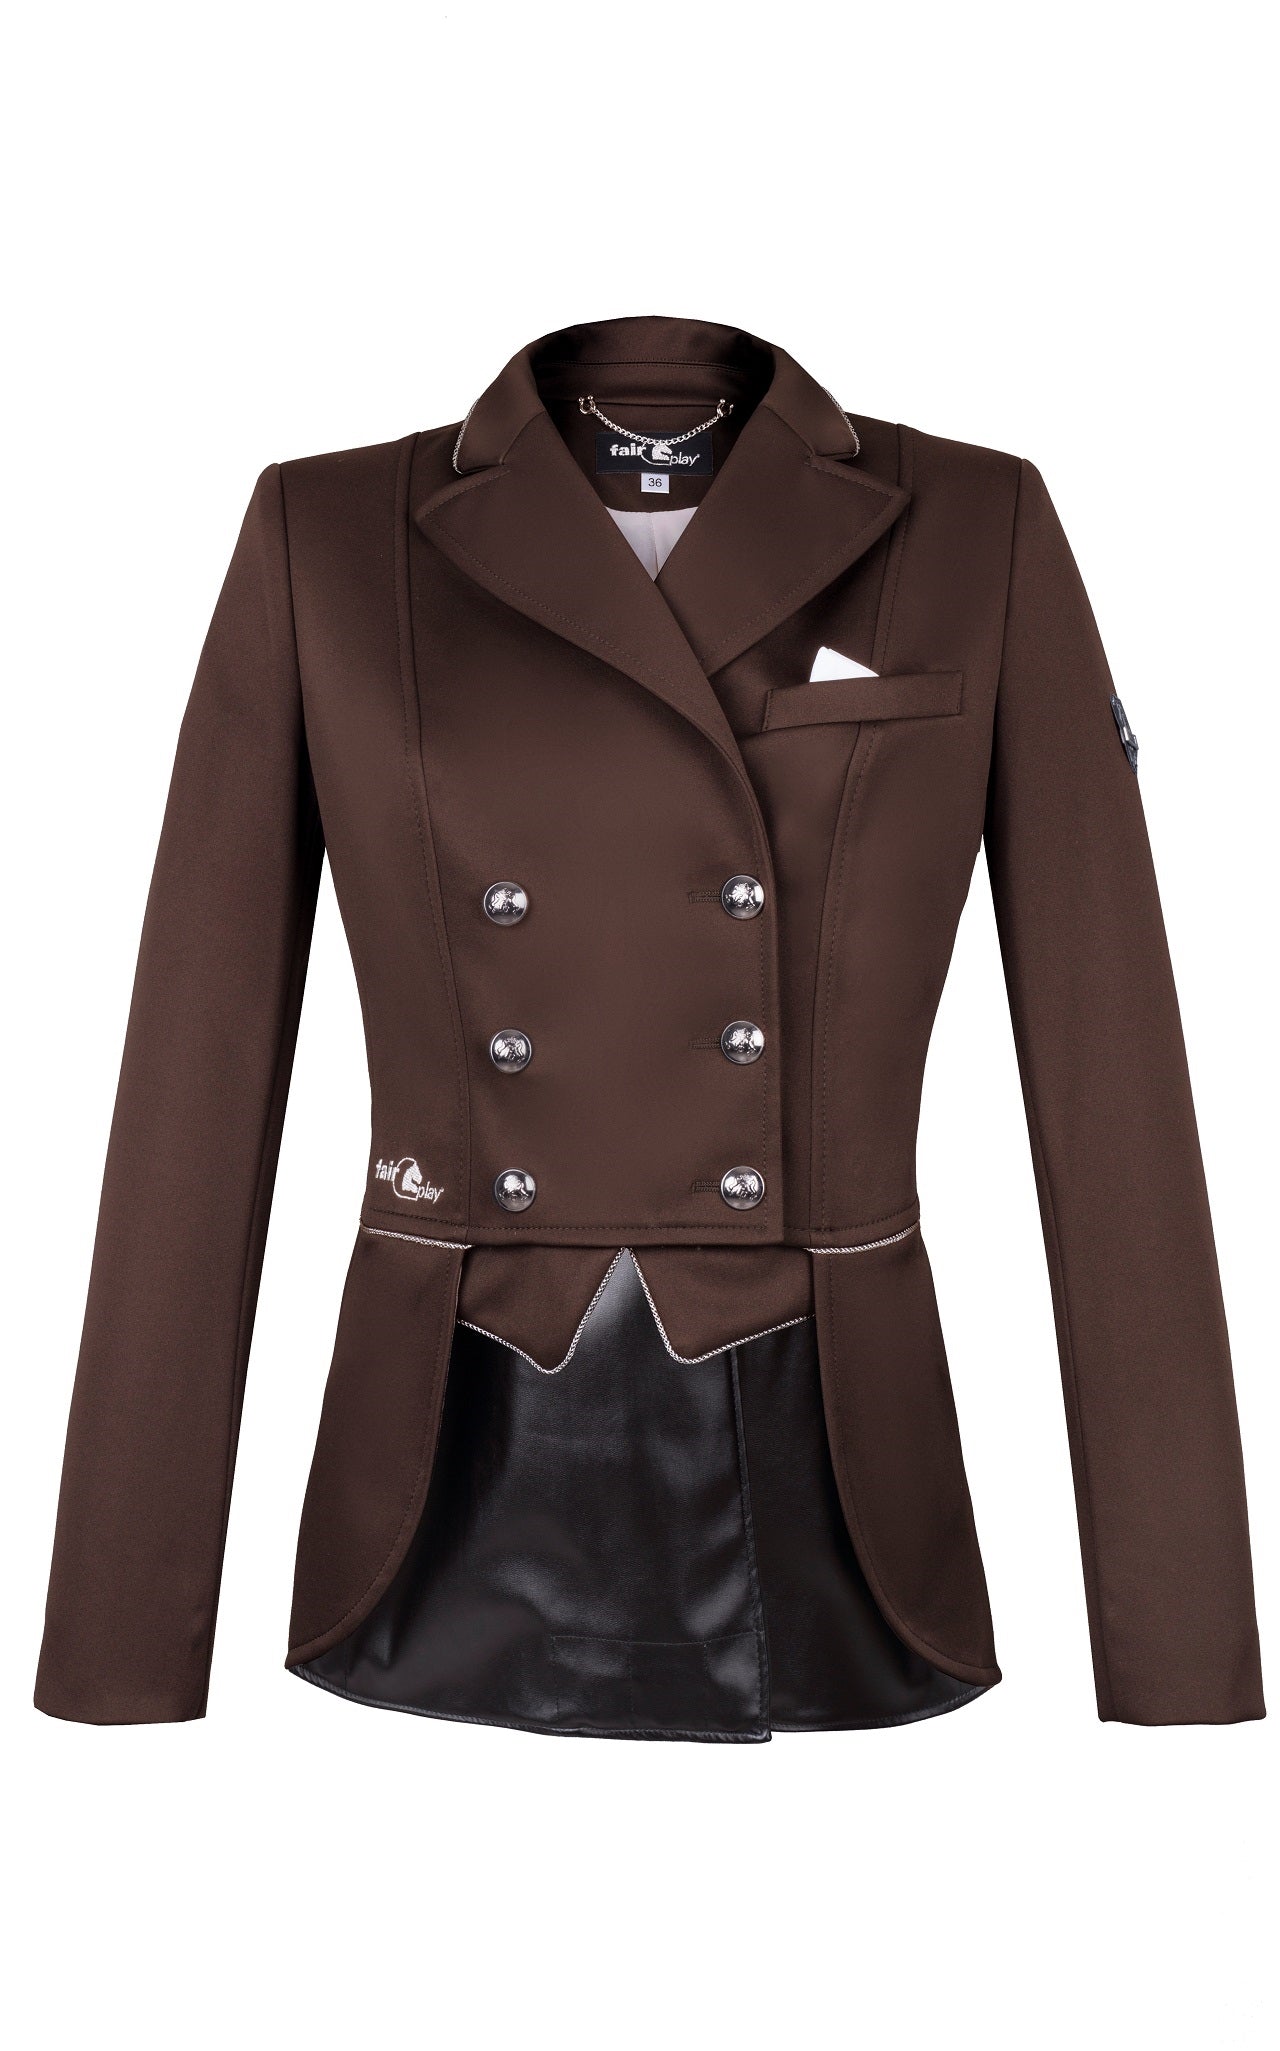 Brown Dressage Jacket